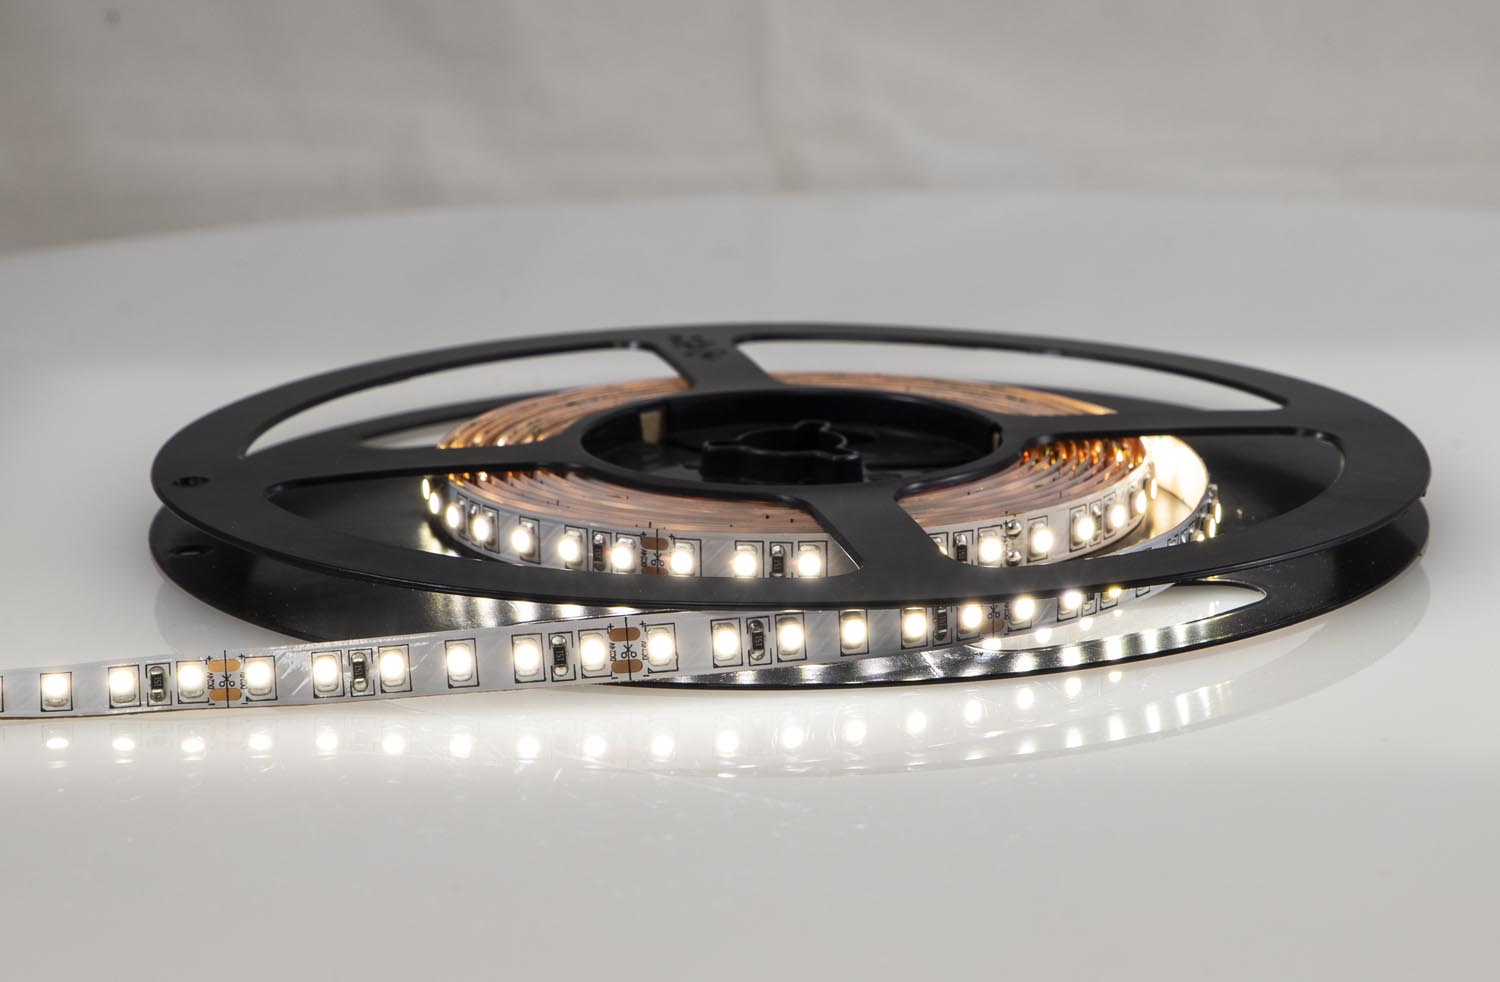 Wavelux Full-Spectrum Fine-Pitch LED Strip Light